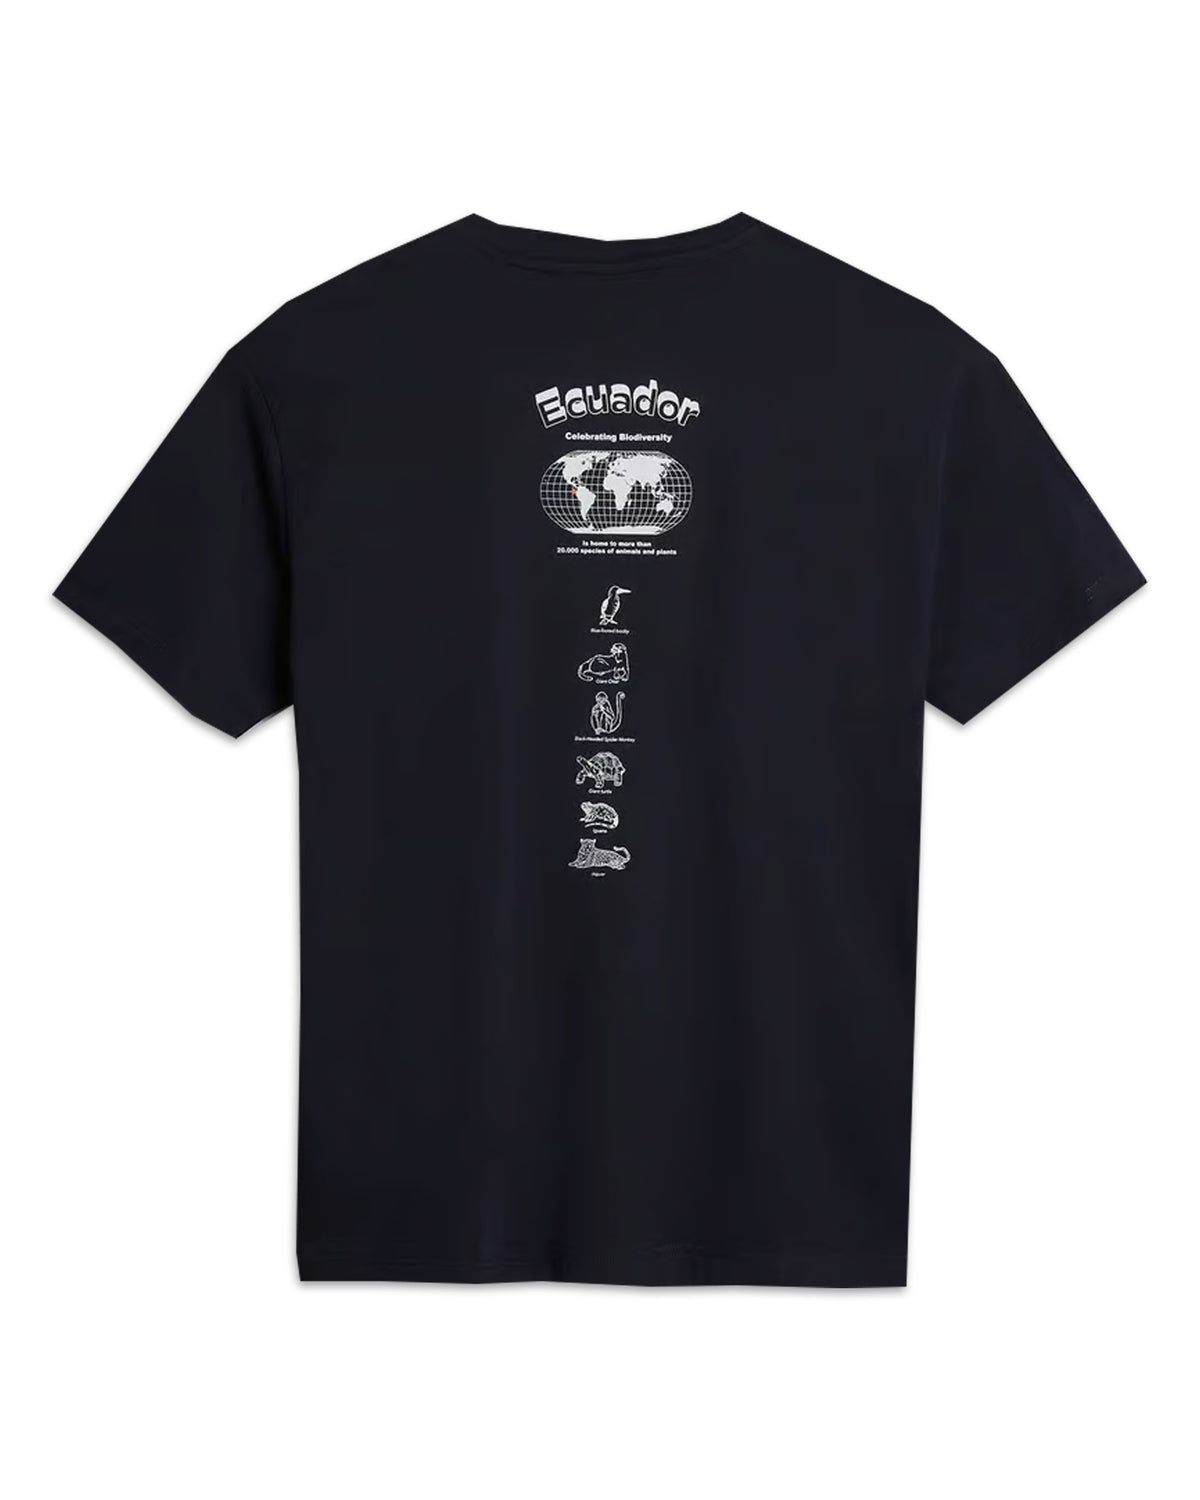 T-Shirt Uomo Napapijri S-Paradise Blu Marine